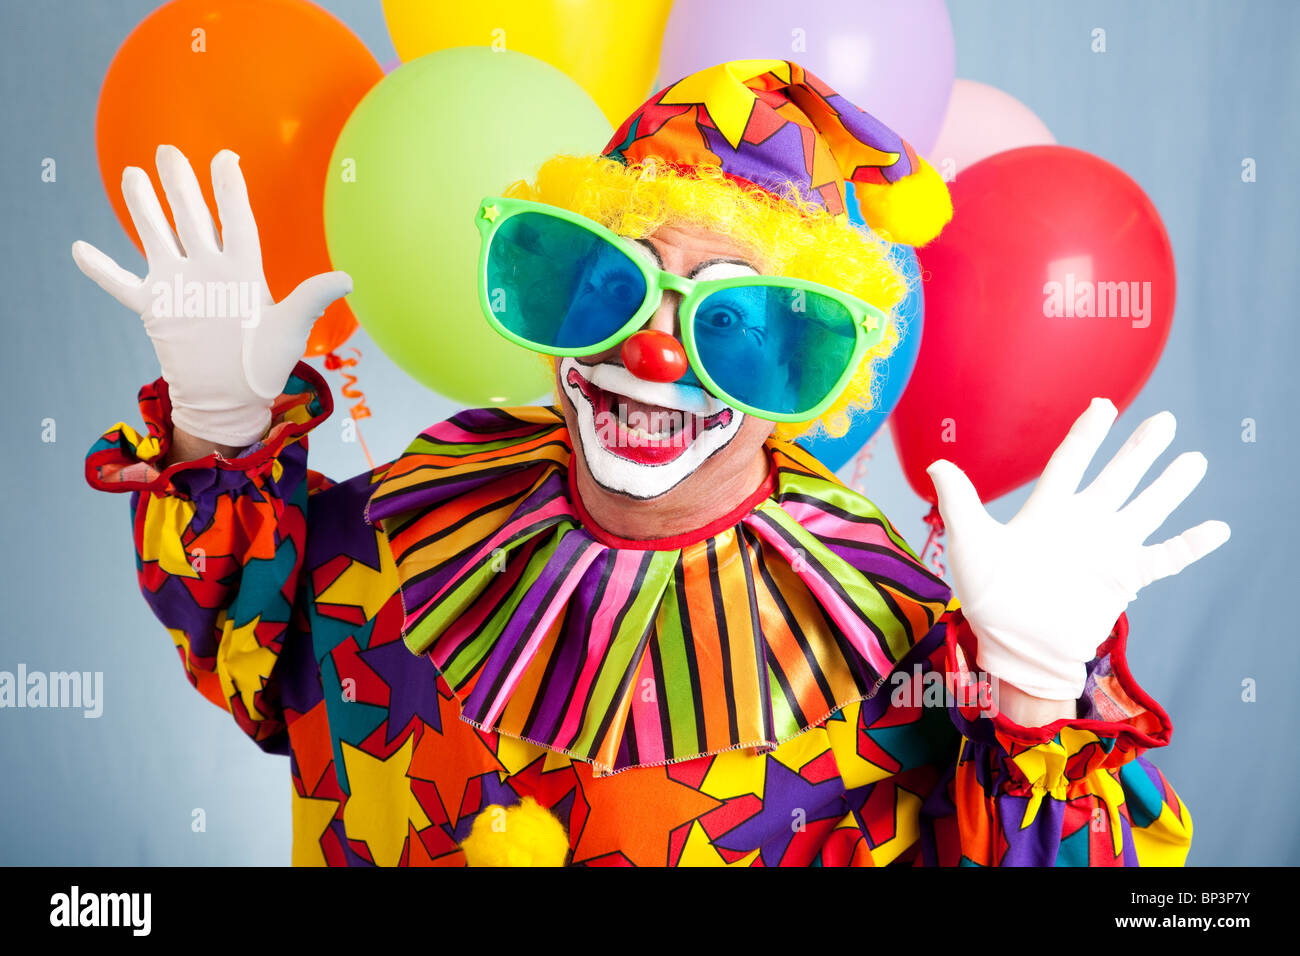 Funny birthday clown in hilarious oversized sunglasses Stock Photo - Alamy